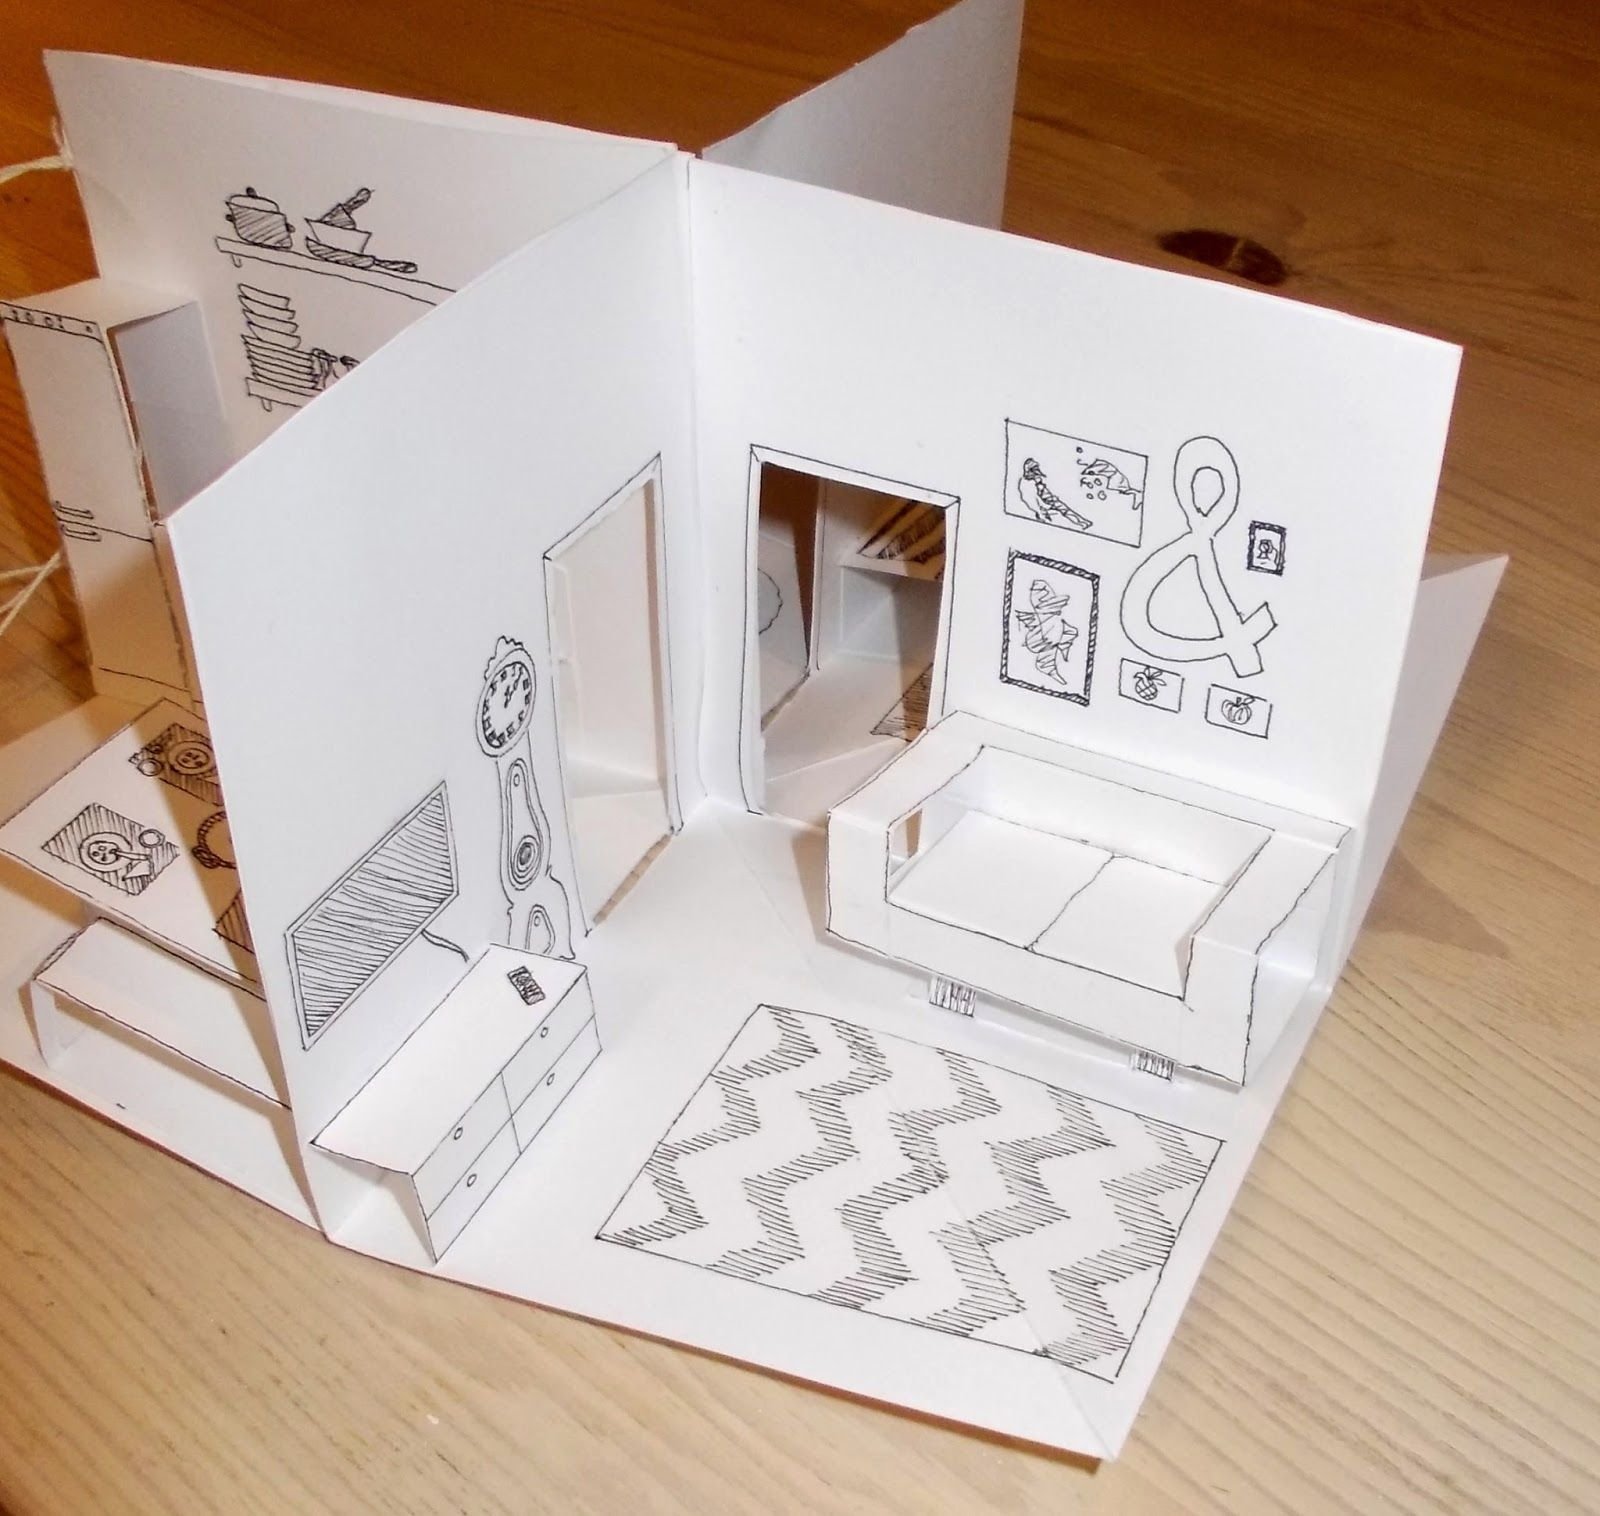 Как создать макет интерьера комнаты